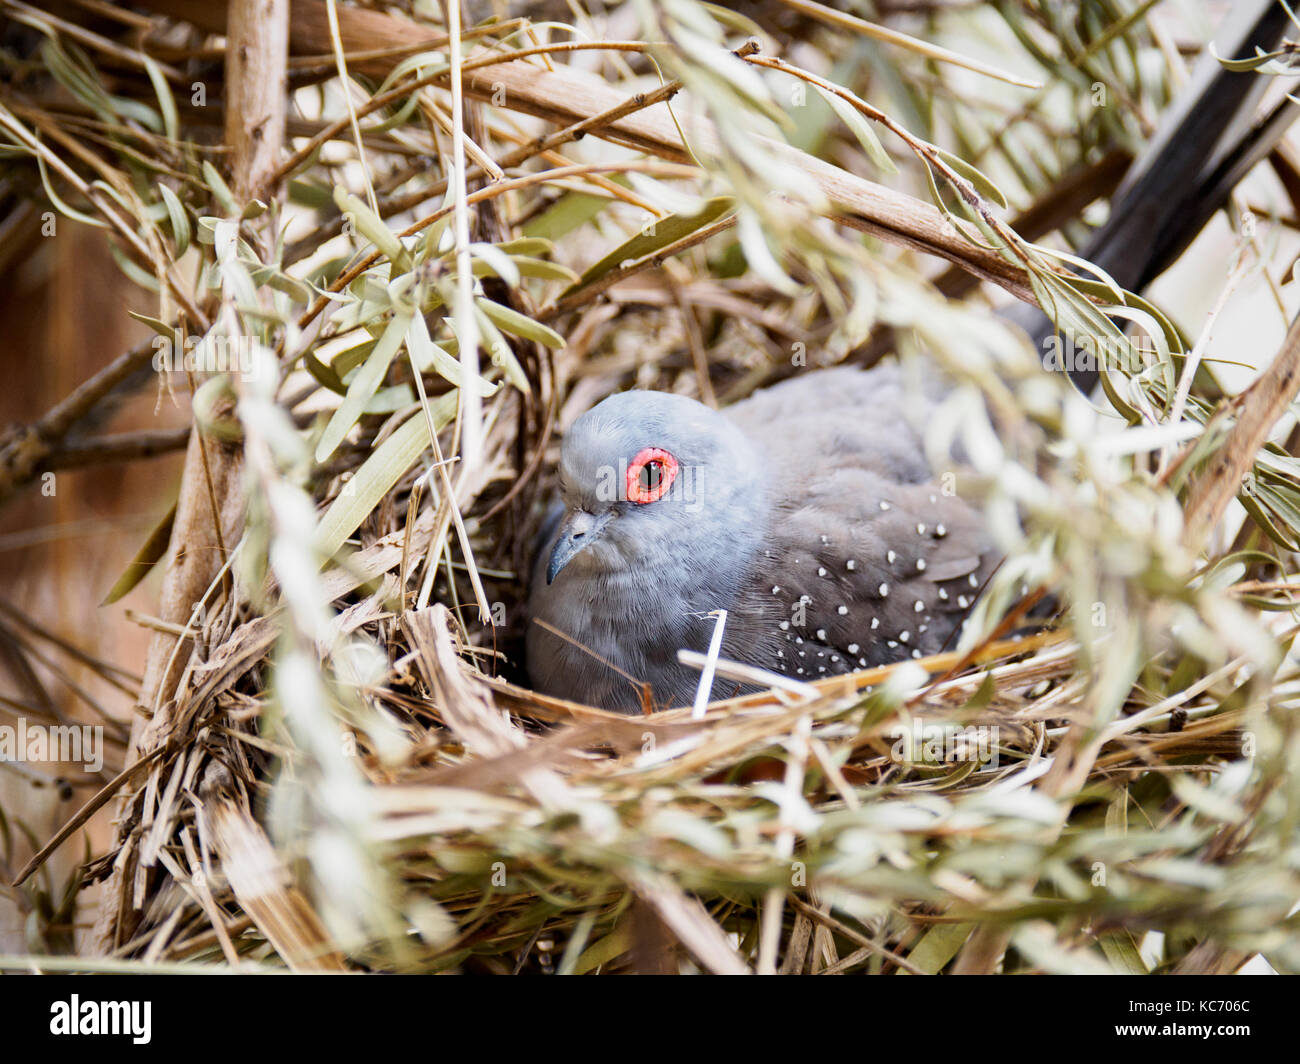 Diamond dove (Geopelia cuneata) in nest Stock Photo